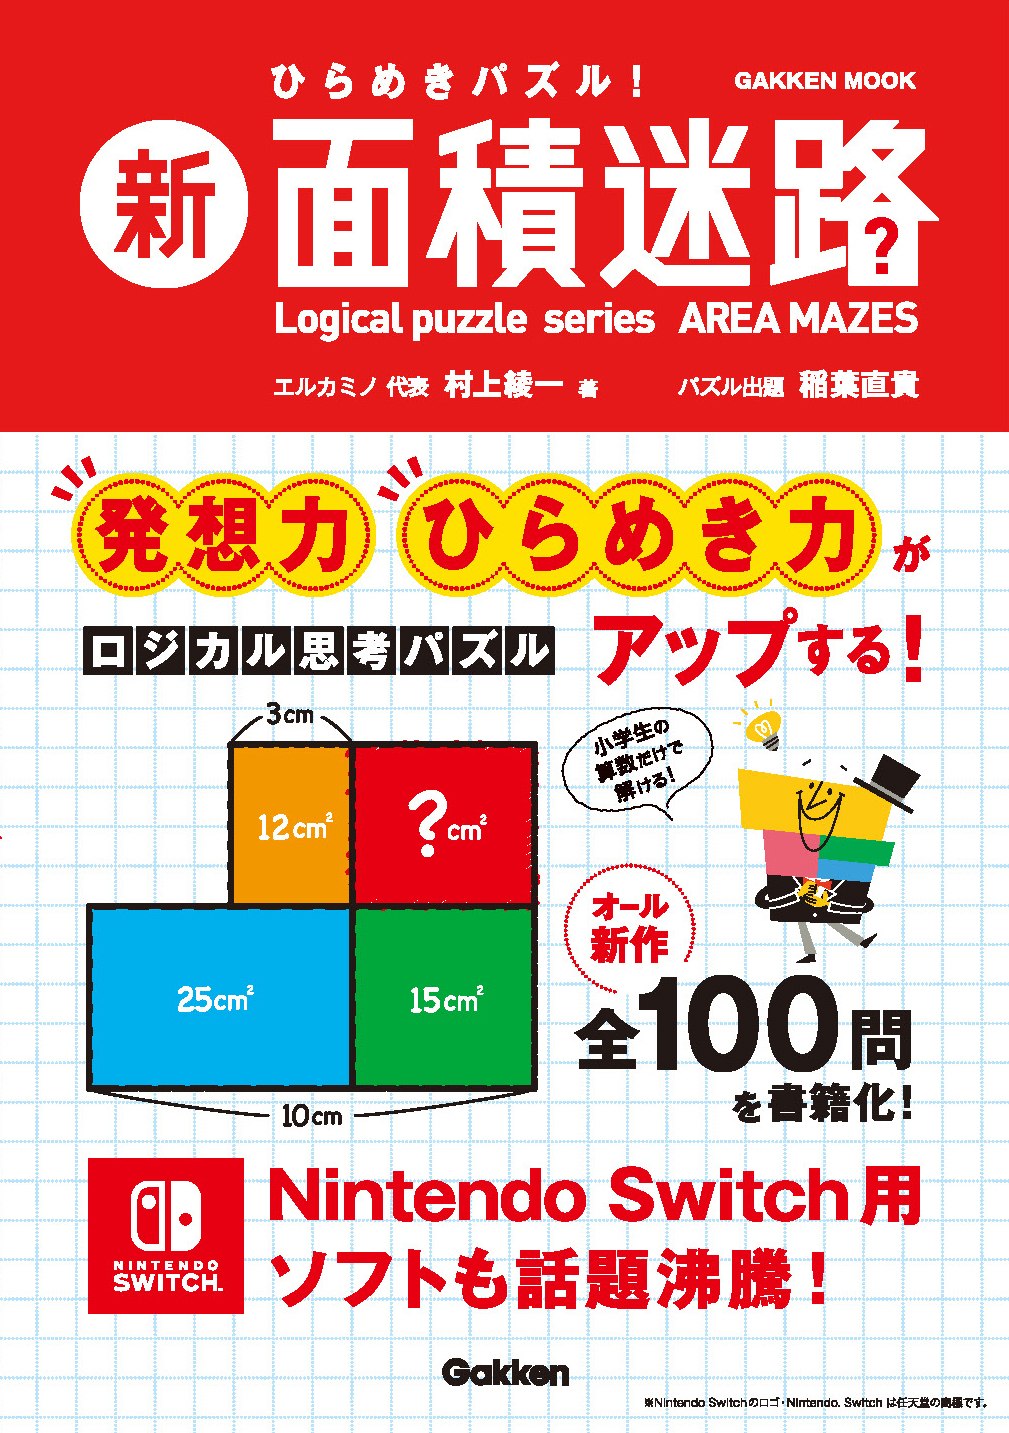 Nintendo Switch用ソフトも話題沸騰 発想力 ひらめき力がアップする 新感覚のロジカル思考パズル 新 面積迷路 発売 株式会社 学研ホールディングスのプレスリリース